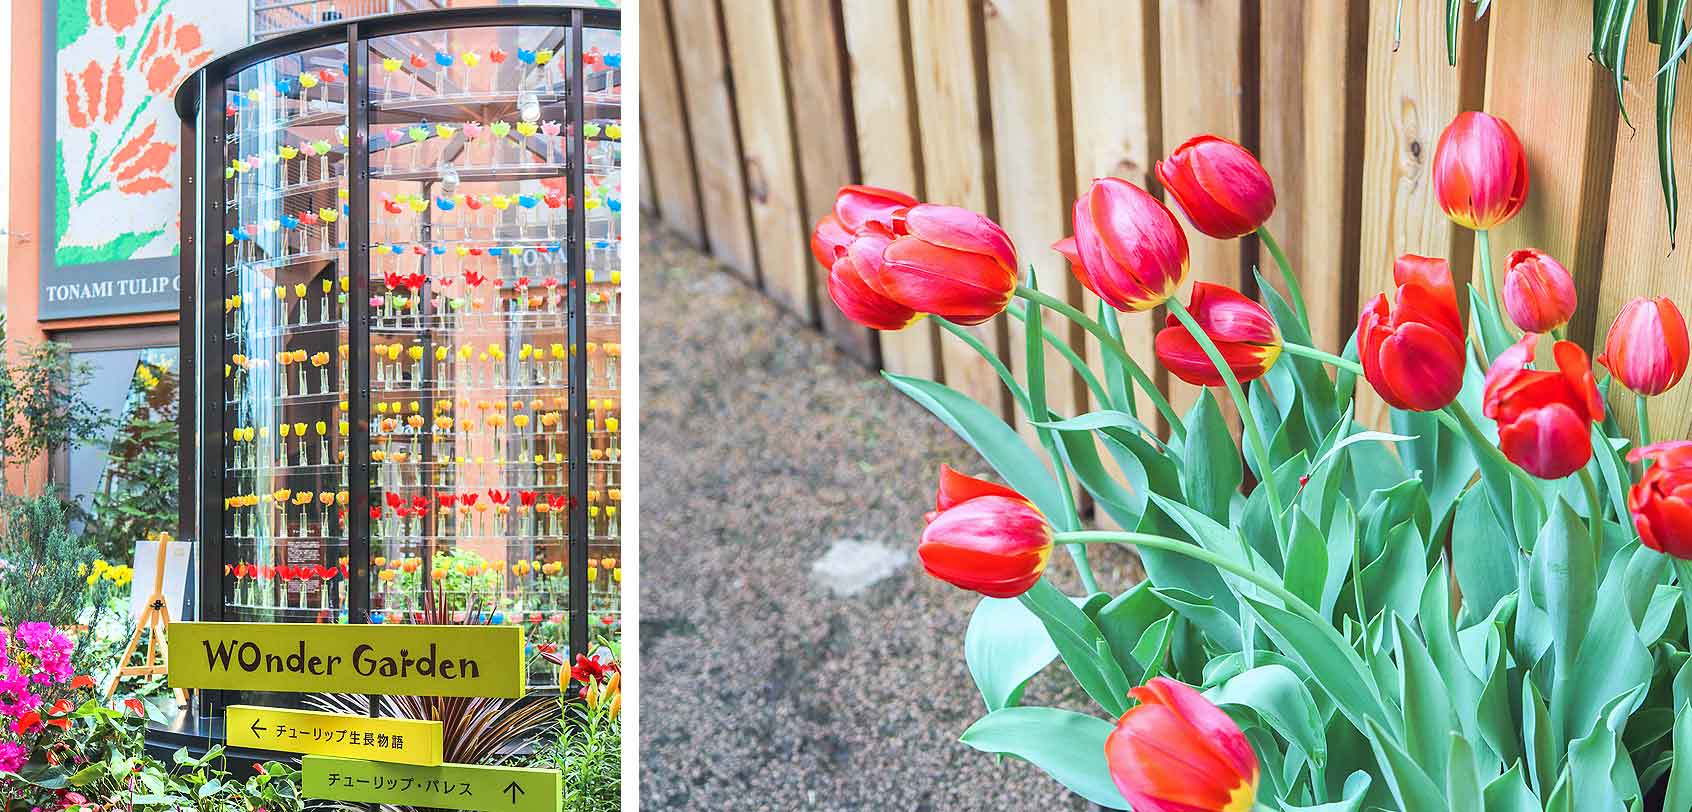 Tonami Tulip Gallery: Where Tulips Bloom All Year Round